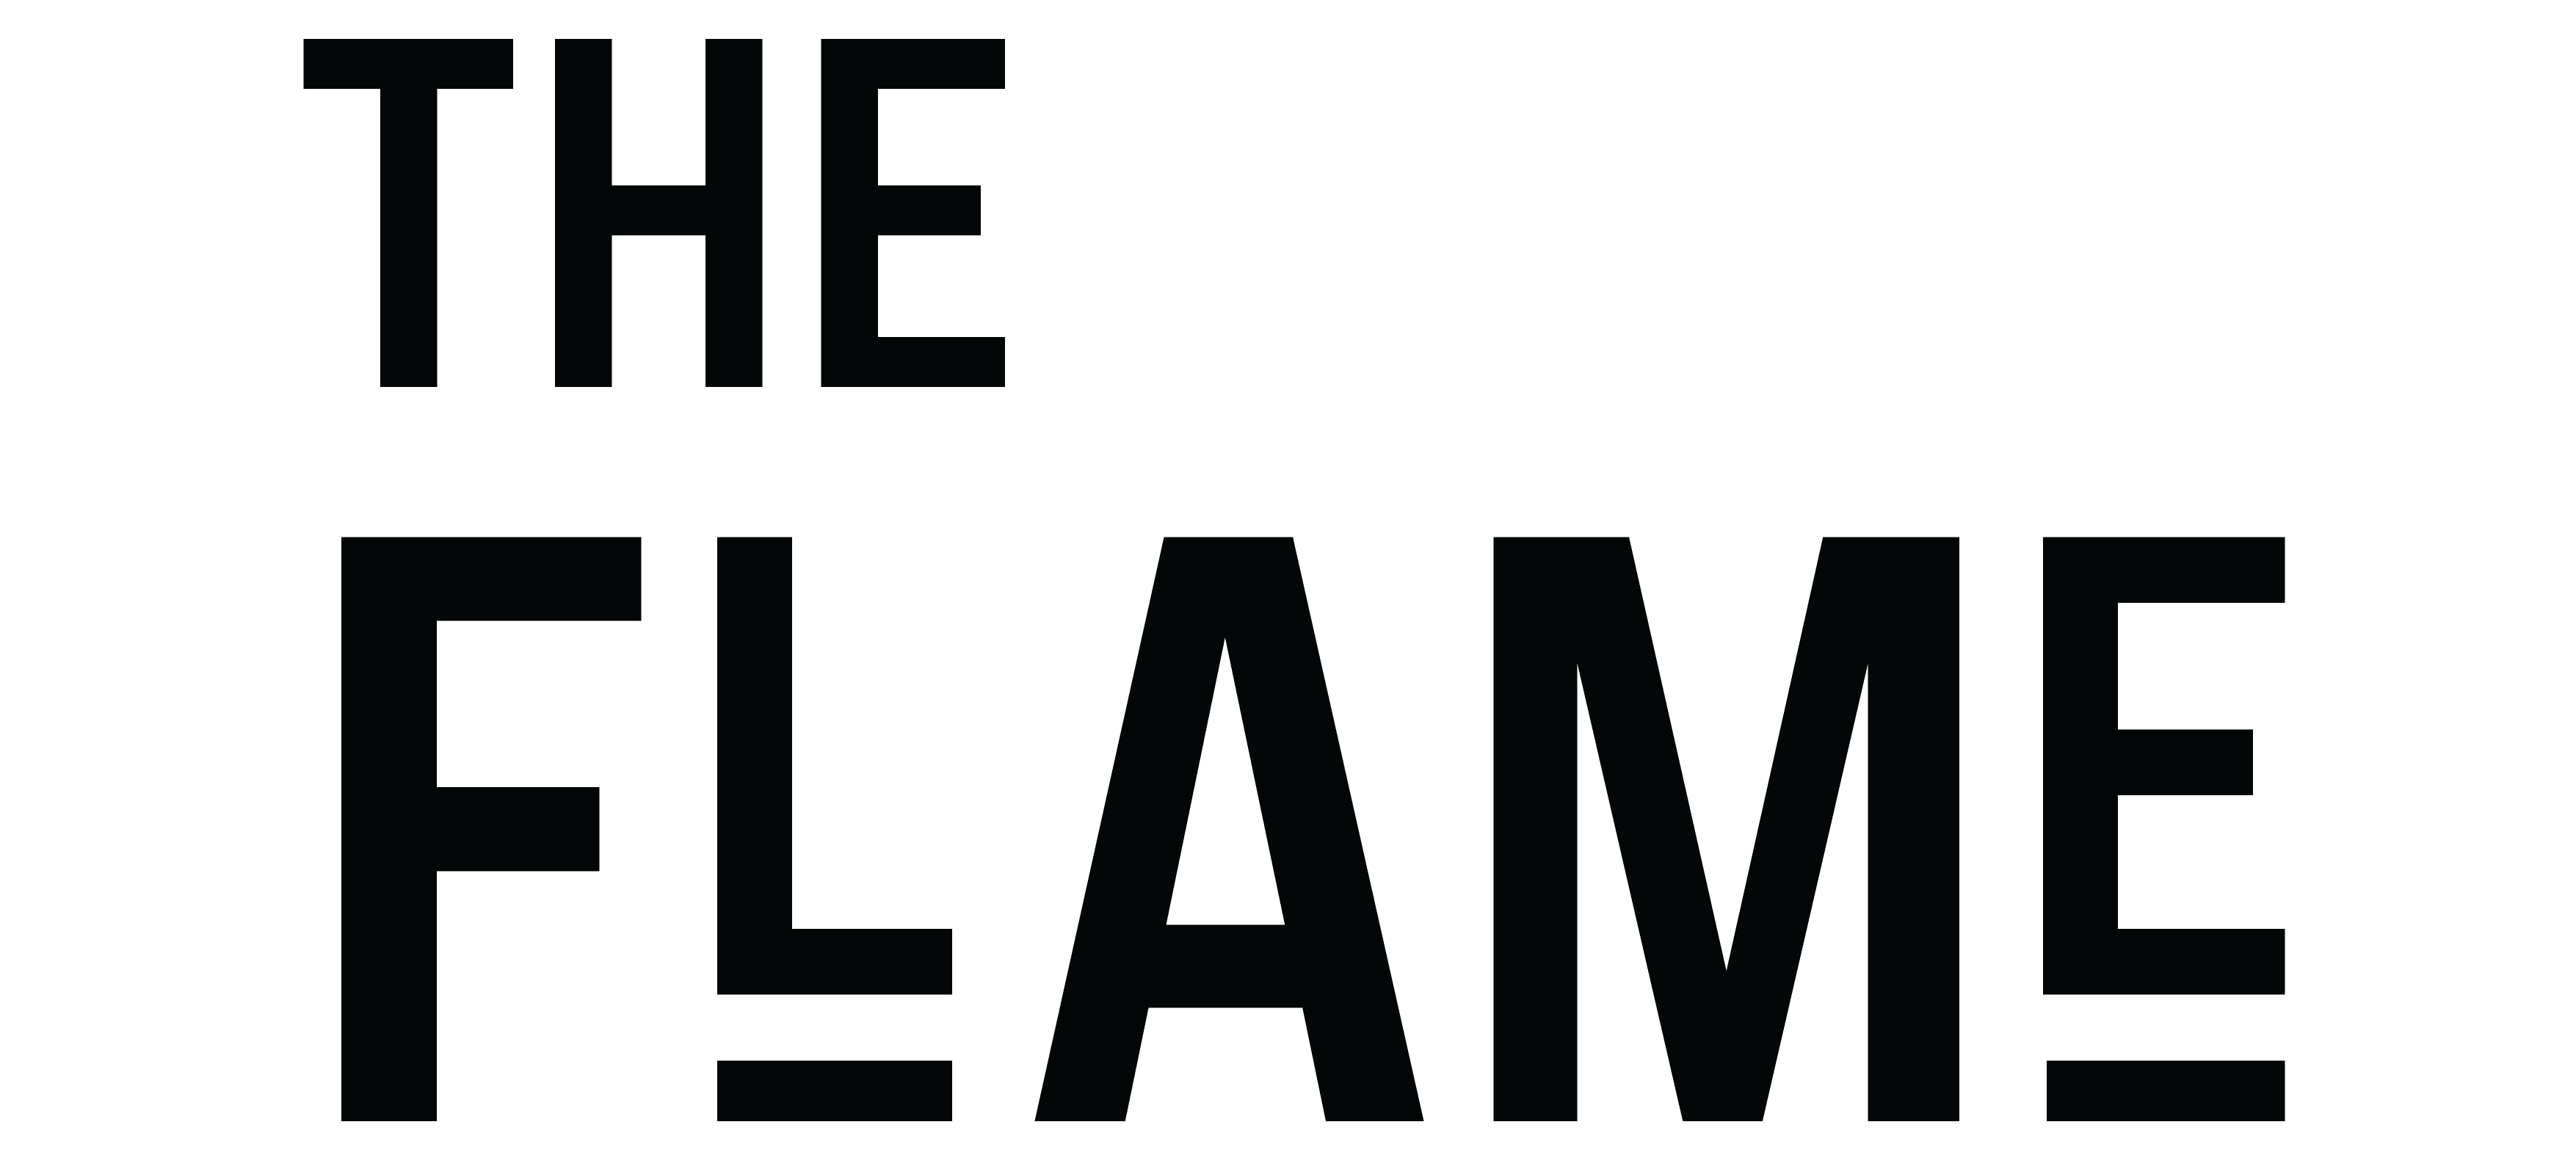 The flame logo black